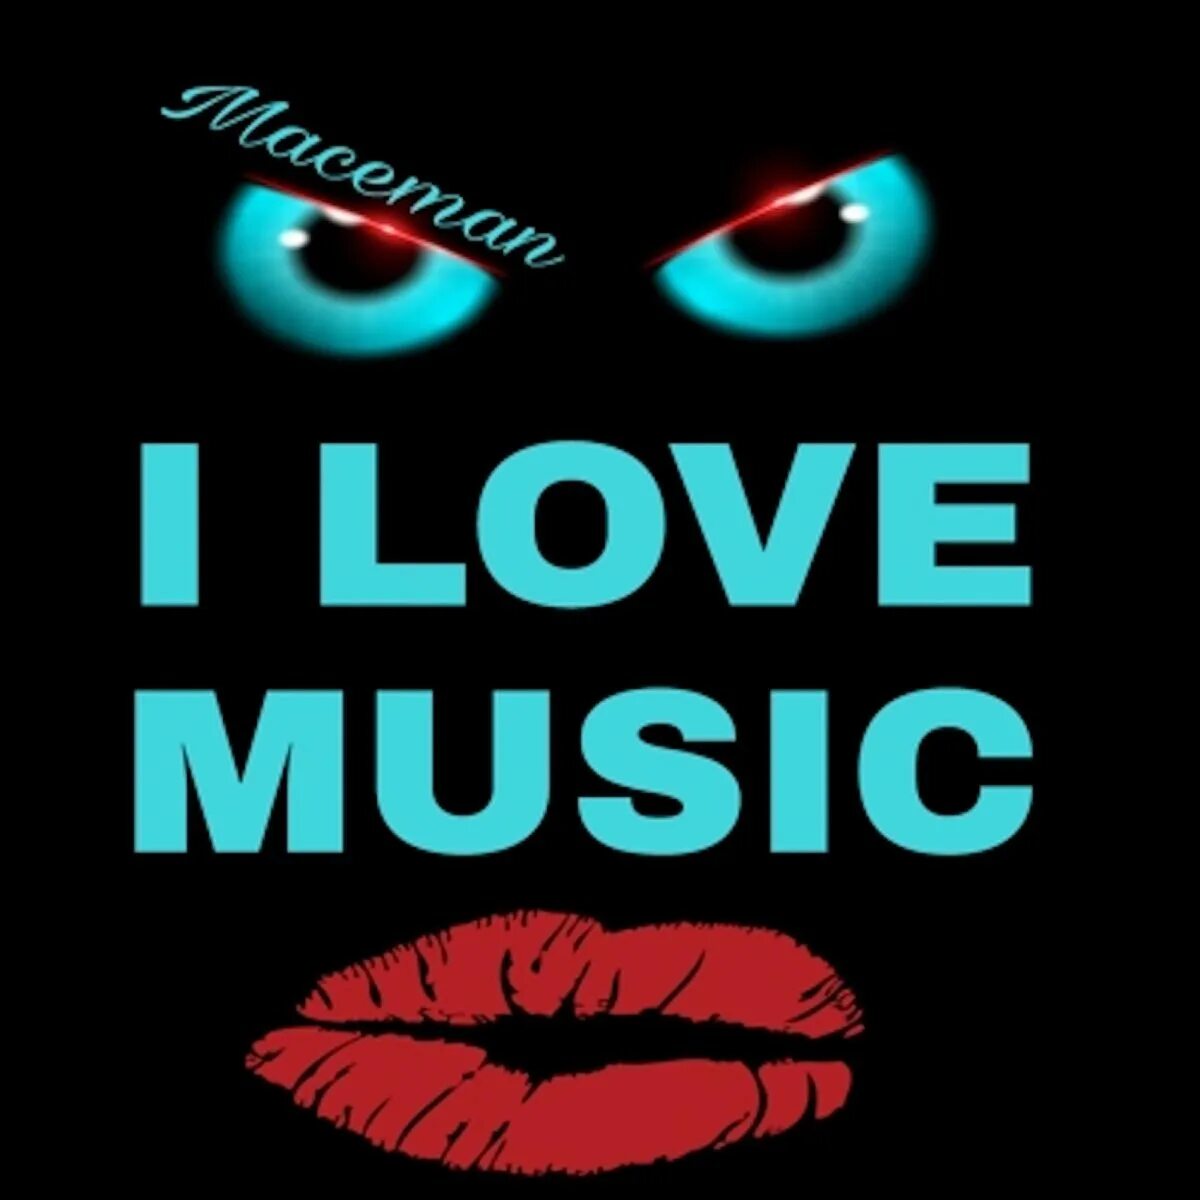 Love Music. I Love you Music. I Love музыку. Love you Music.